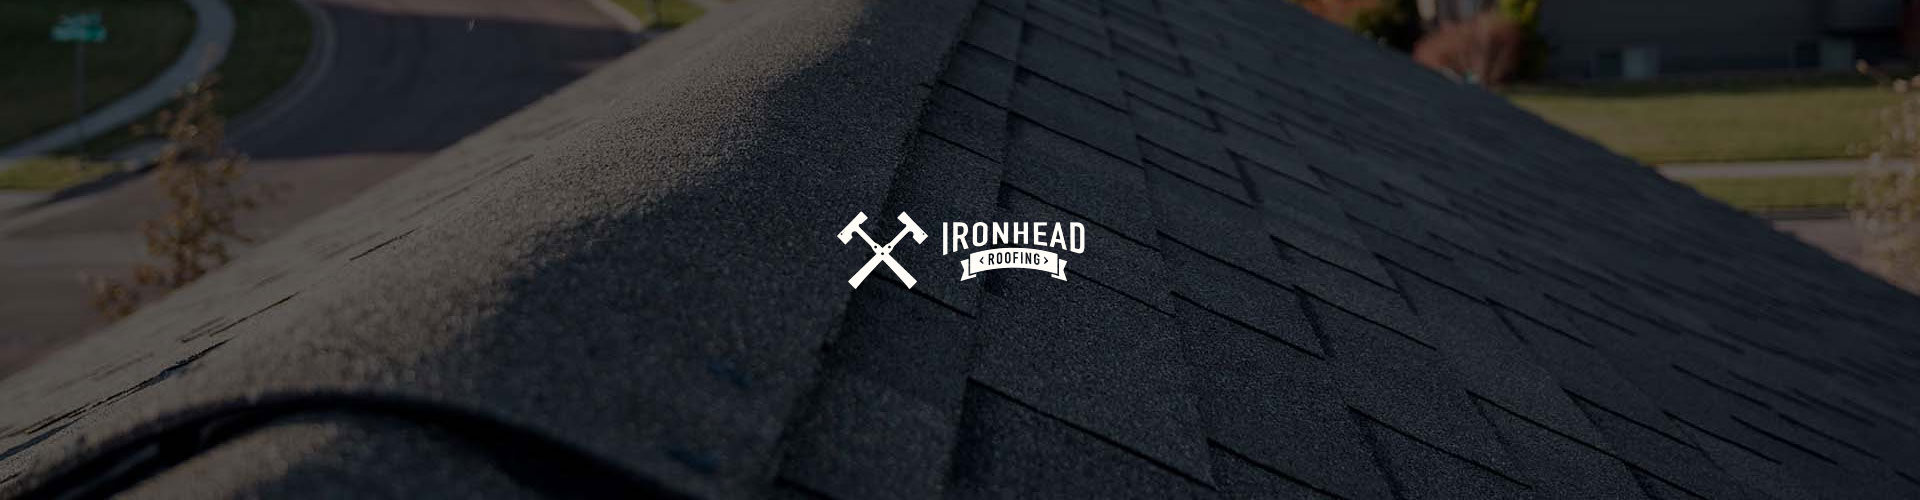 Case Study - Ironhead Roofing